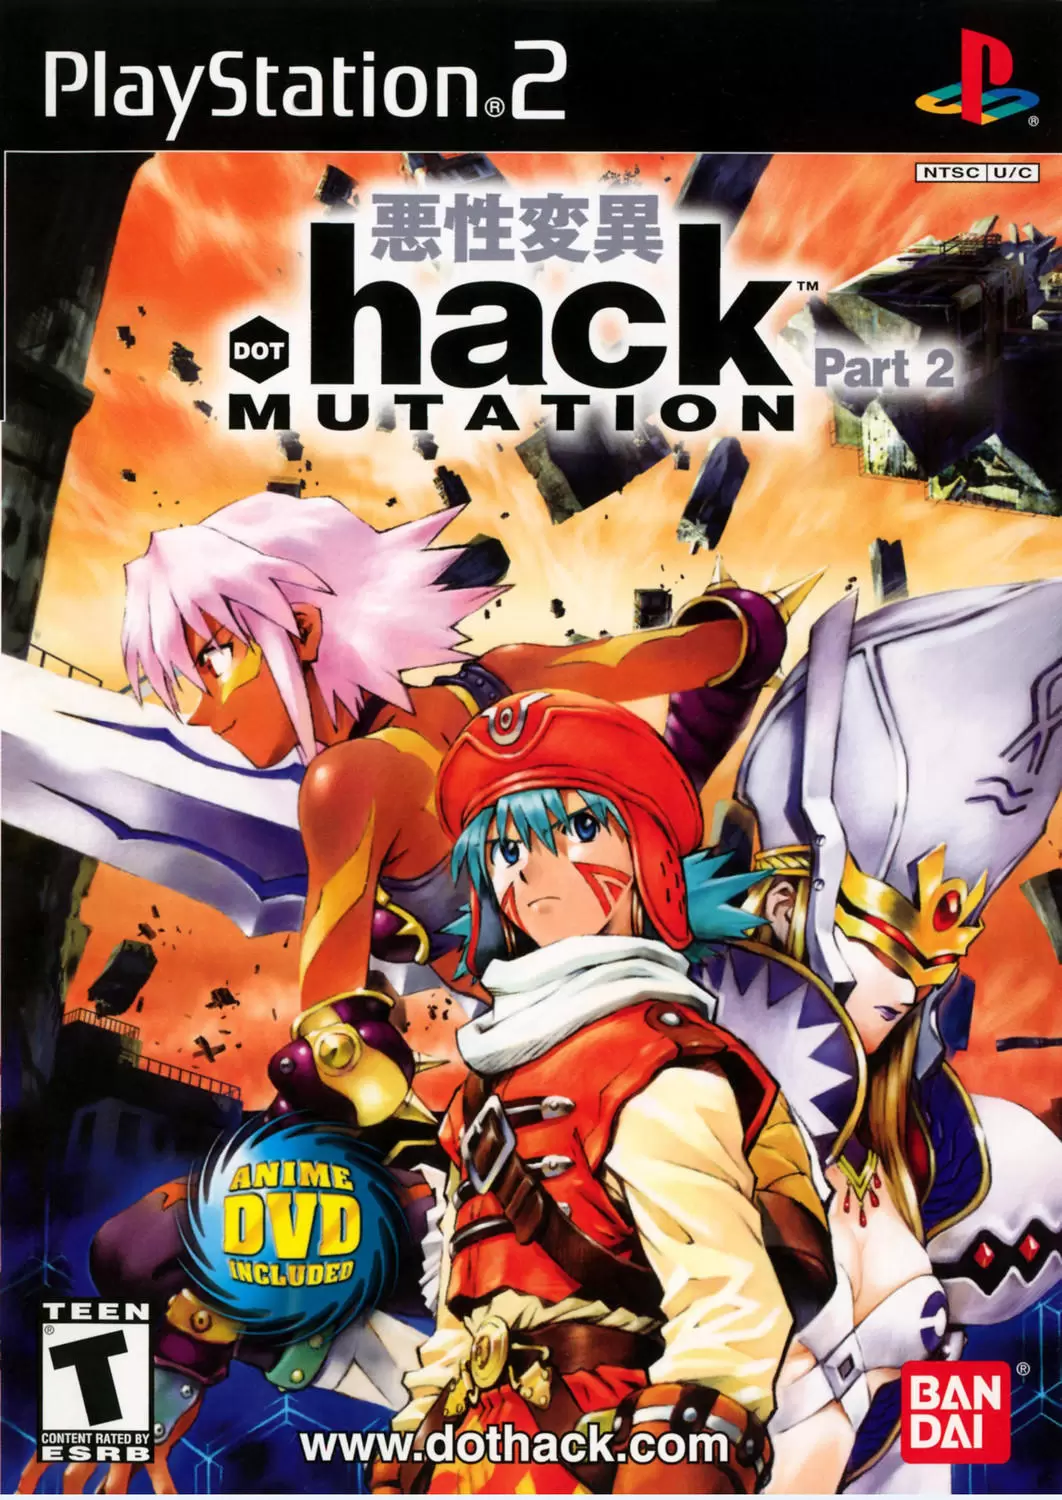 PS2 Games - .hack//Mutation